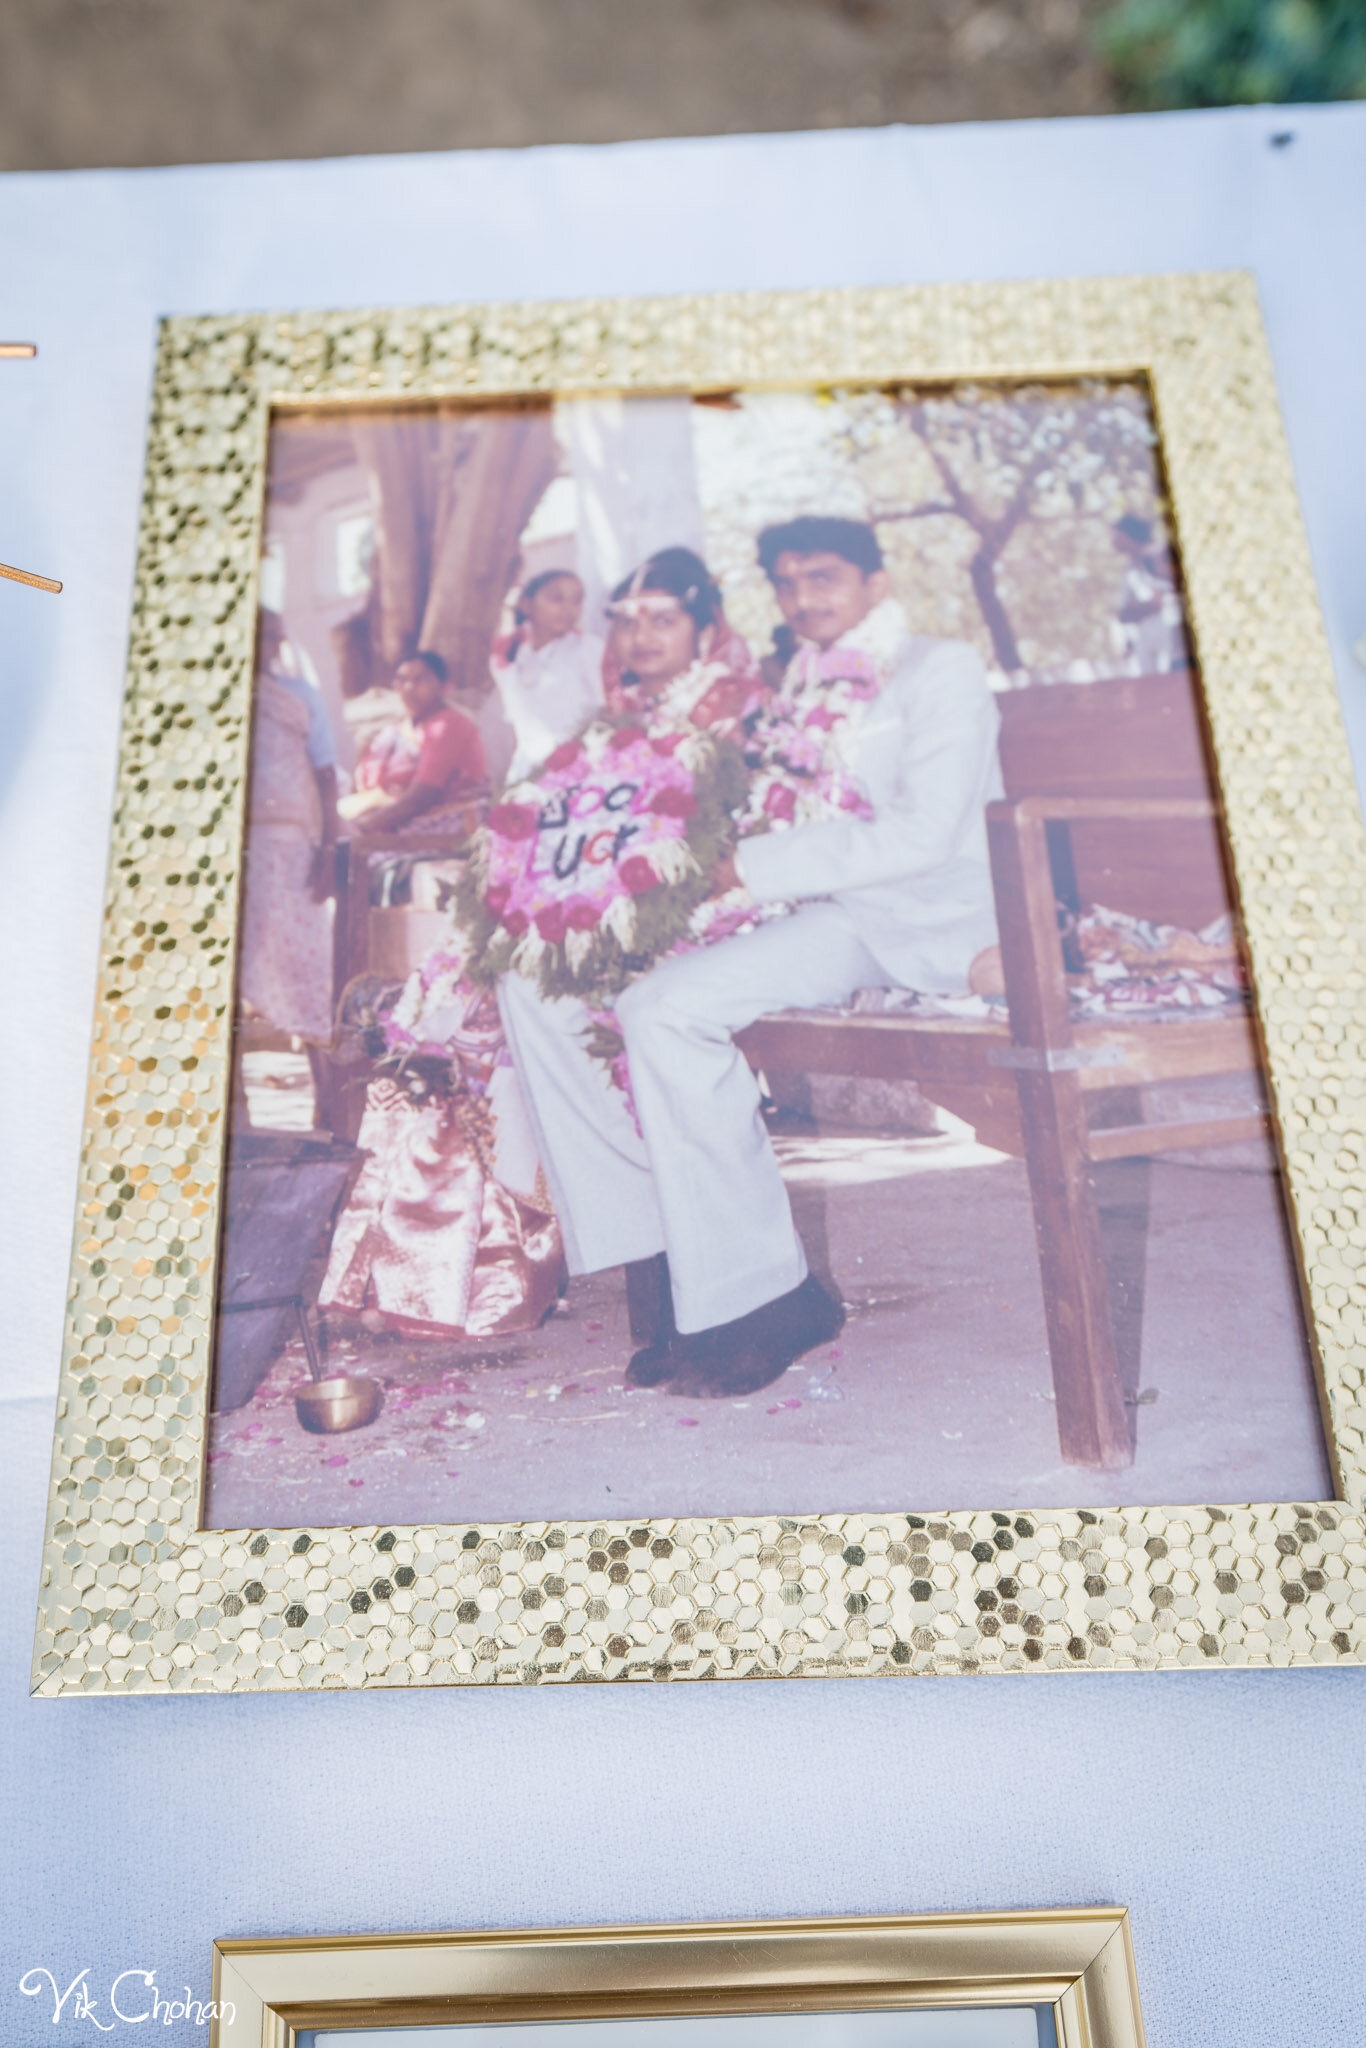 2021-07-30-Shaan-&-Megha-Wedding-Vik-Chohan-Photography-Photo-Booth-Social-Media-VCP-344.jpg